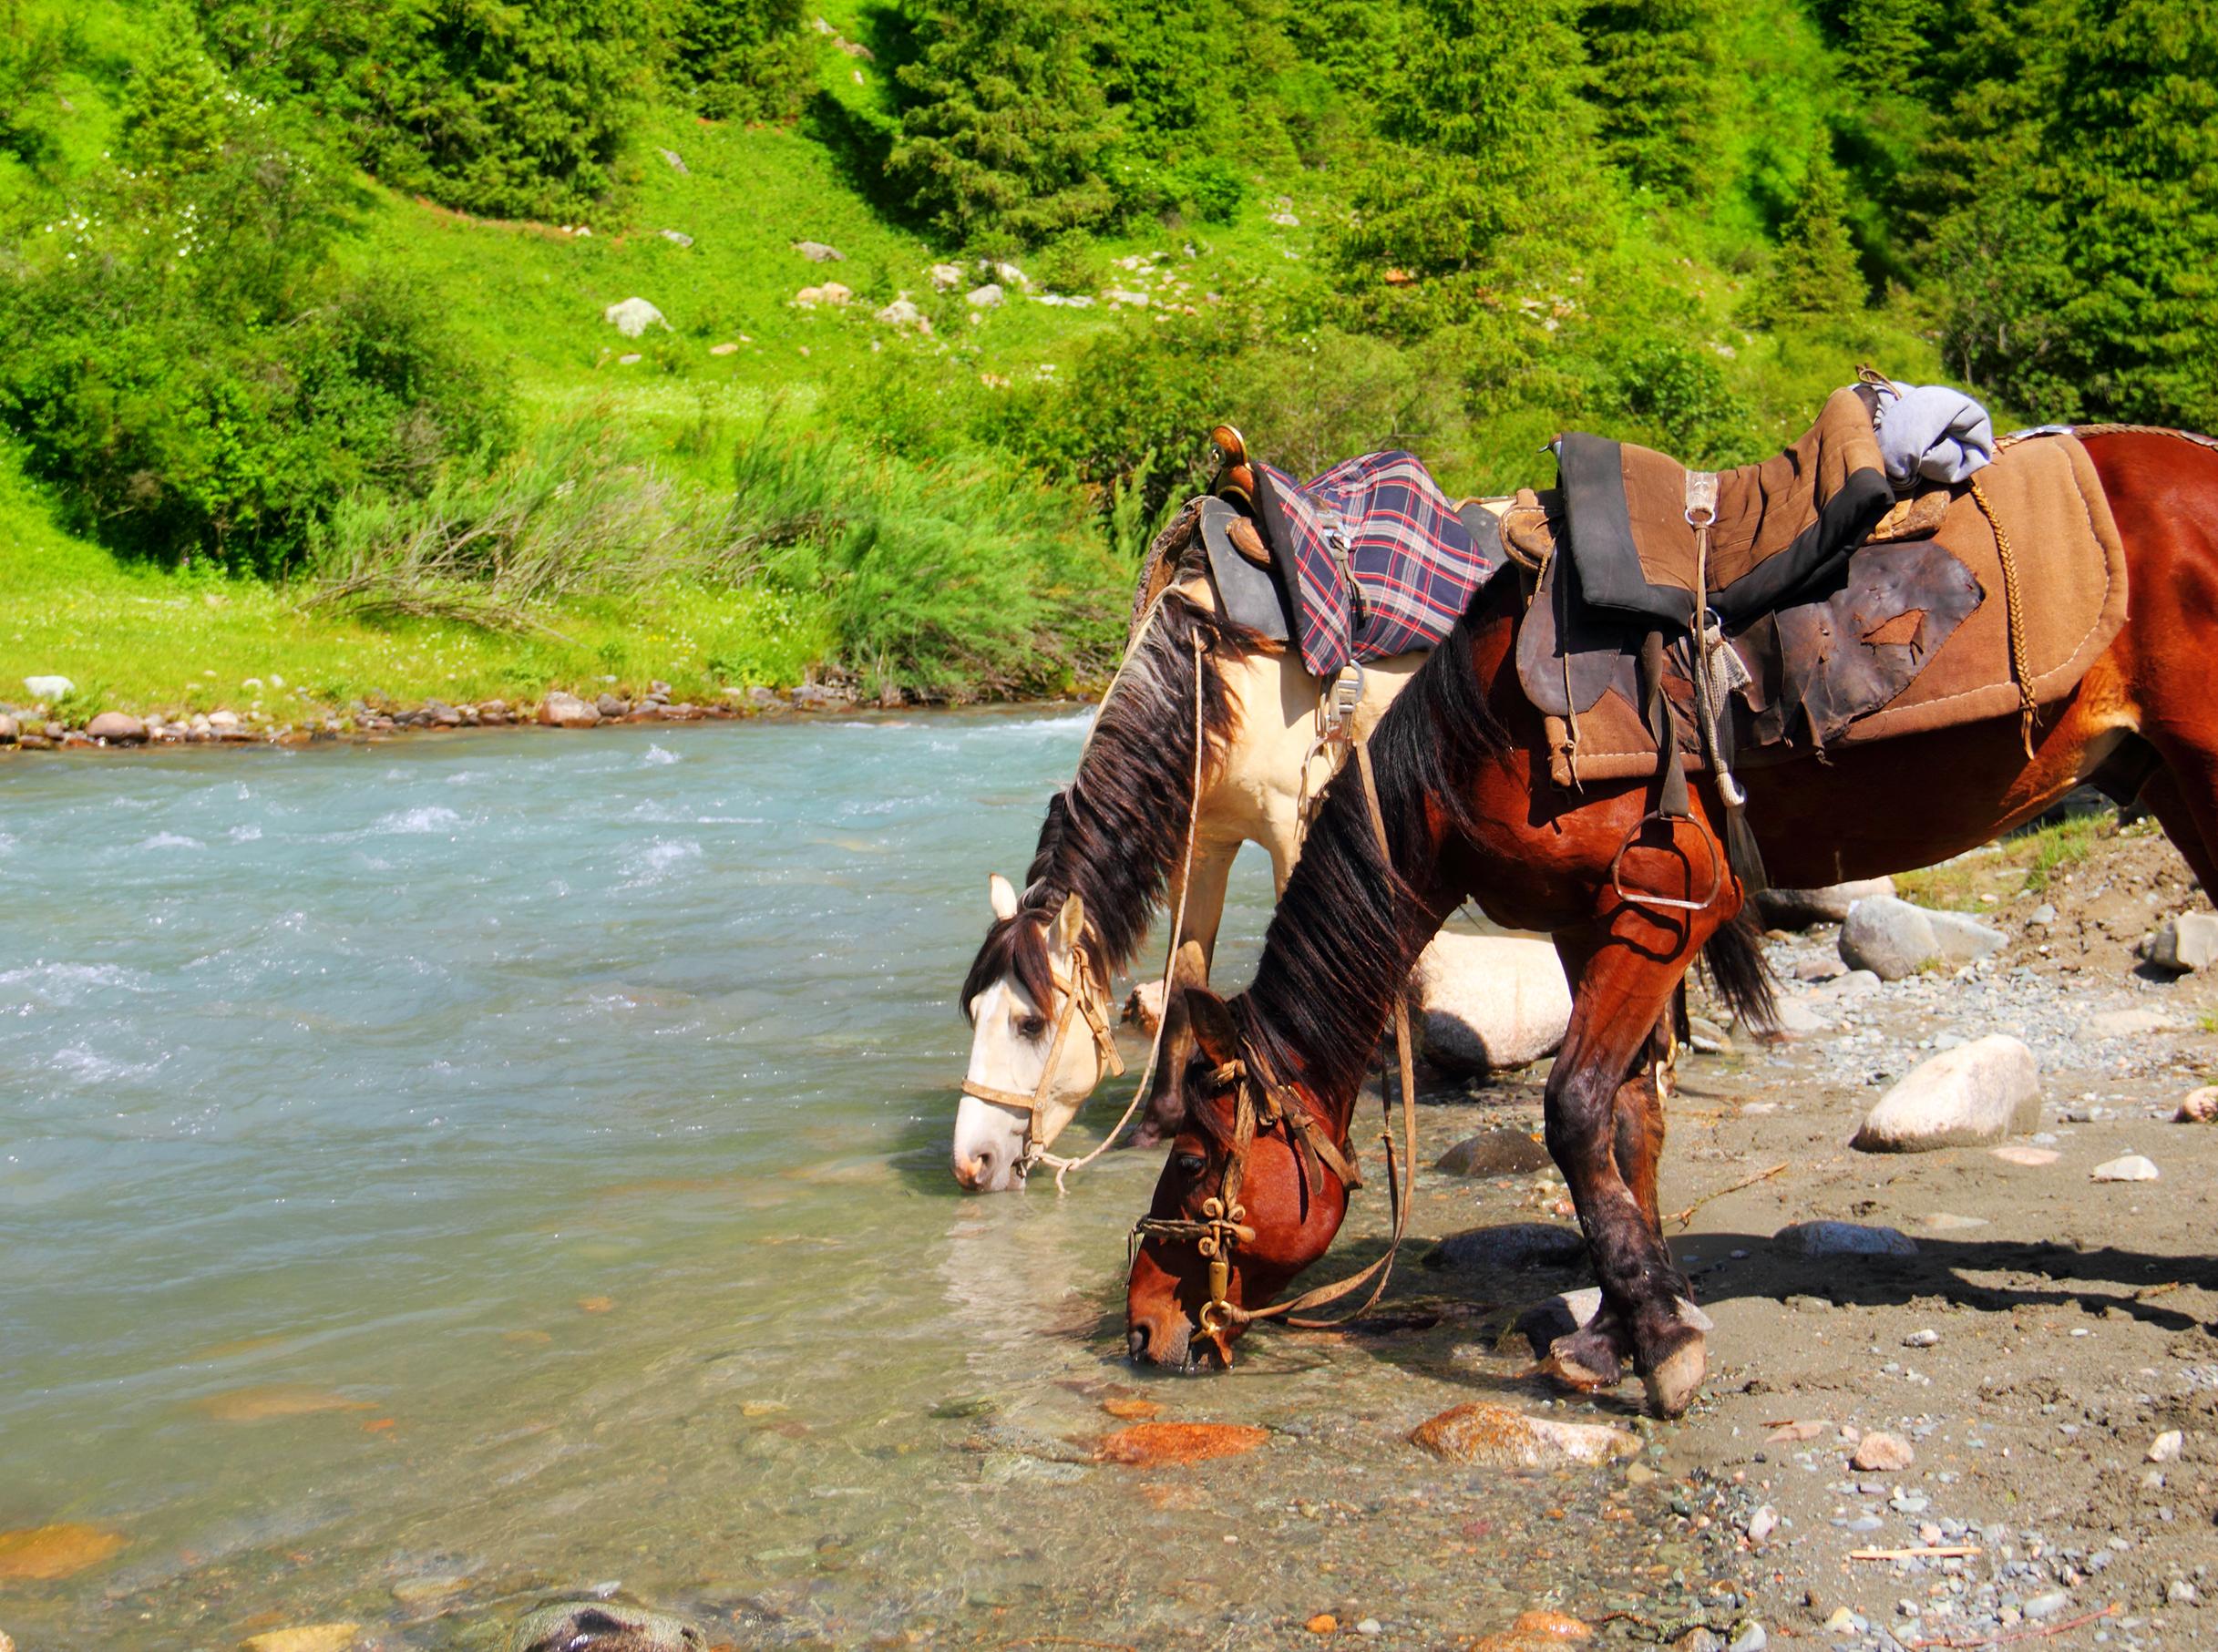 Horses resting near the river